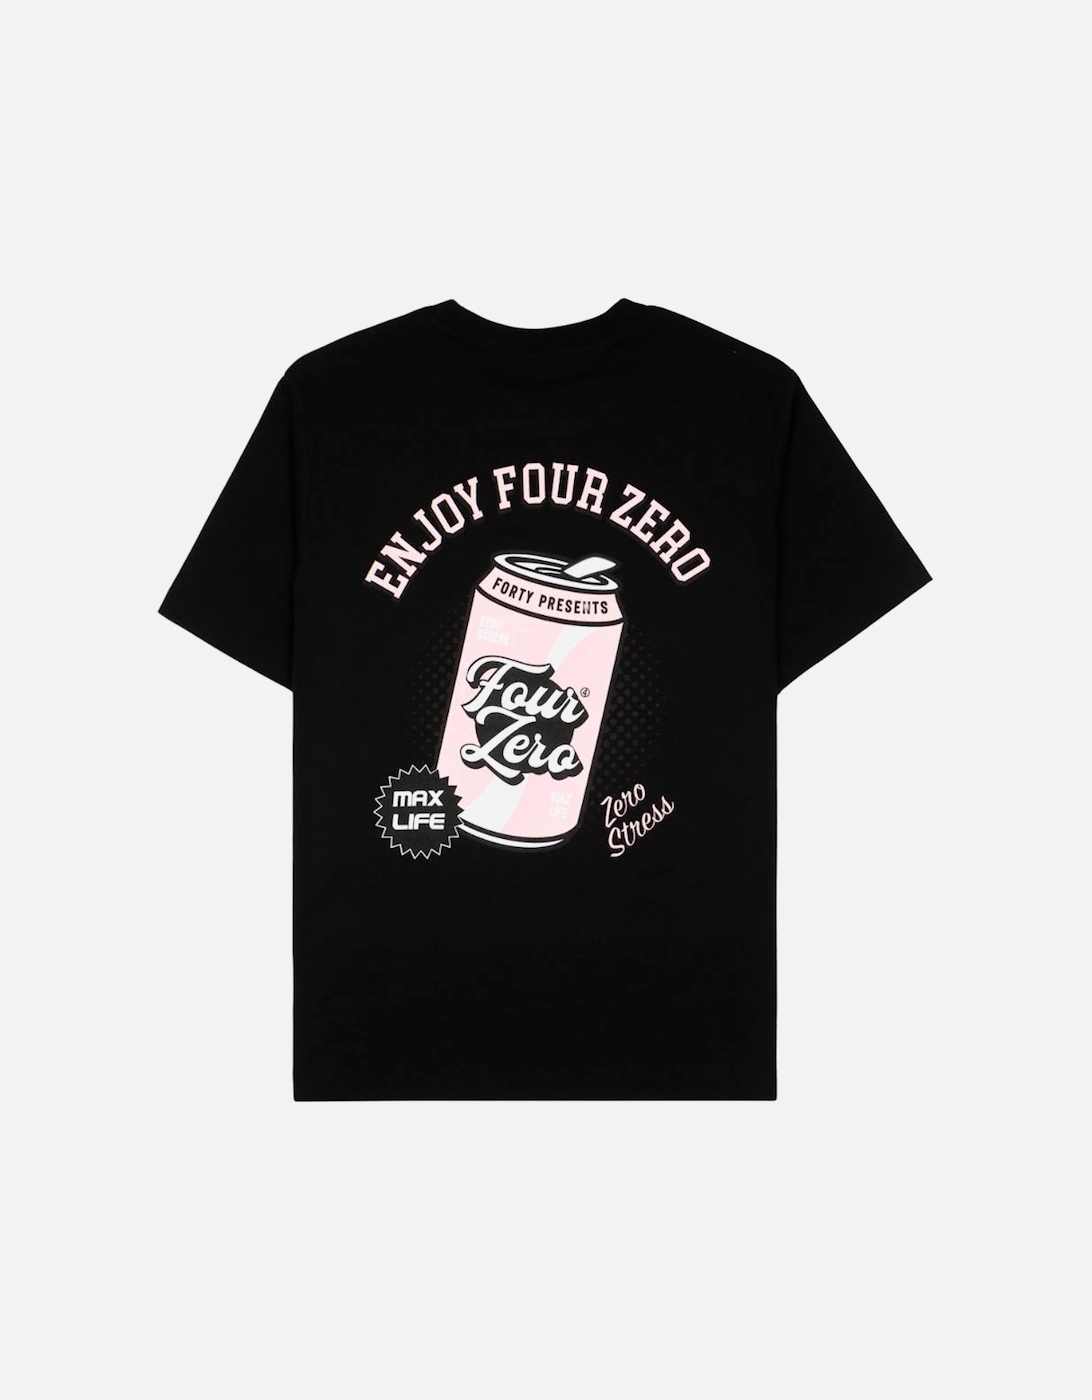 Four Zero Soda T-Shirt - Black